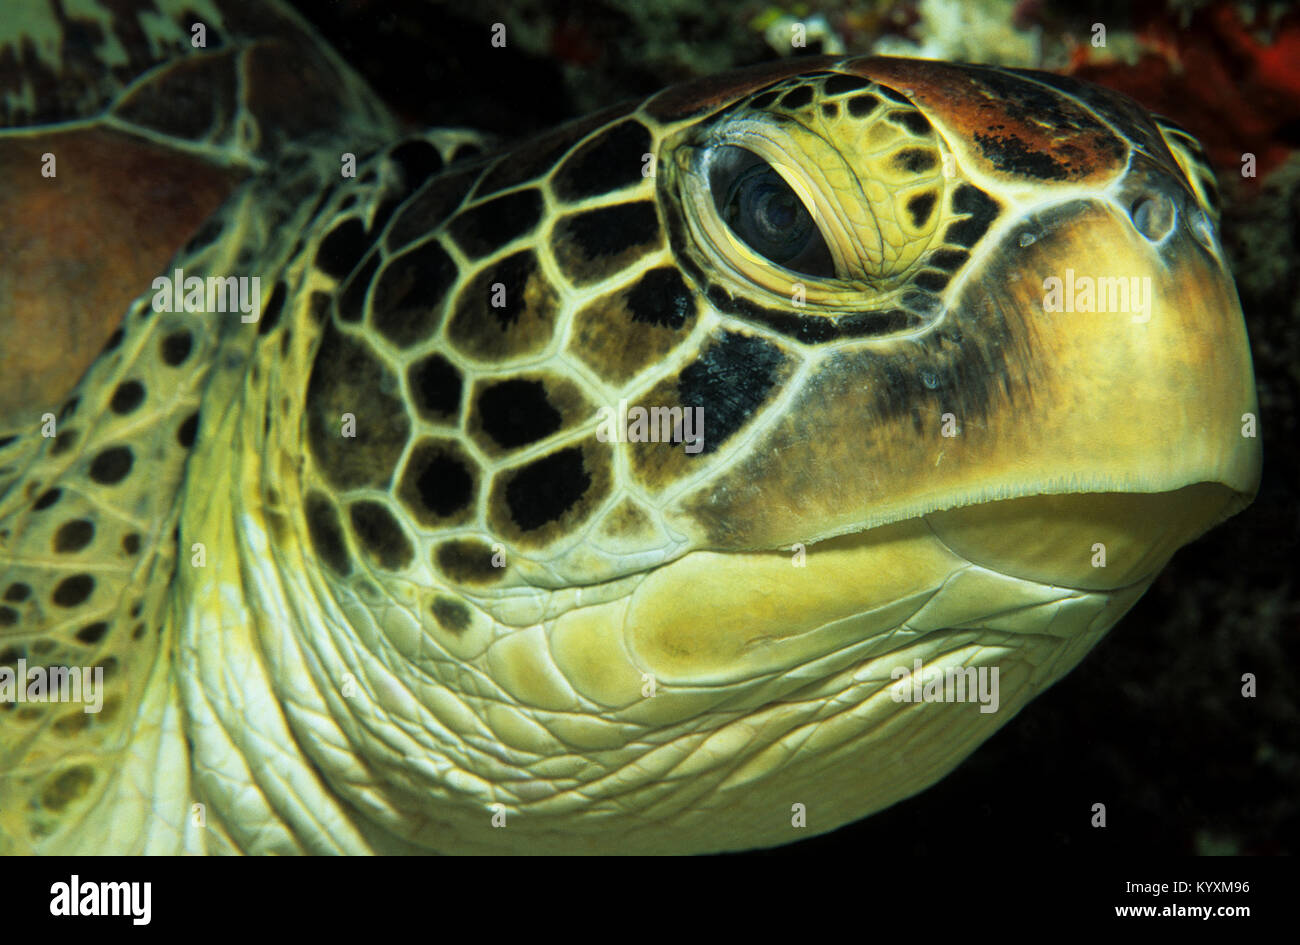 Grüne Meeresschildkröte (Chelonia mydas), Malediven Inseln, Indischer Ozean, Asien Stockfoto